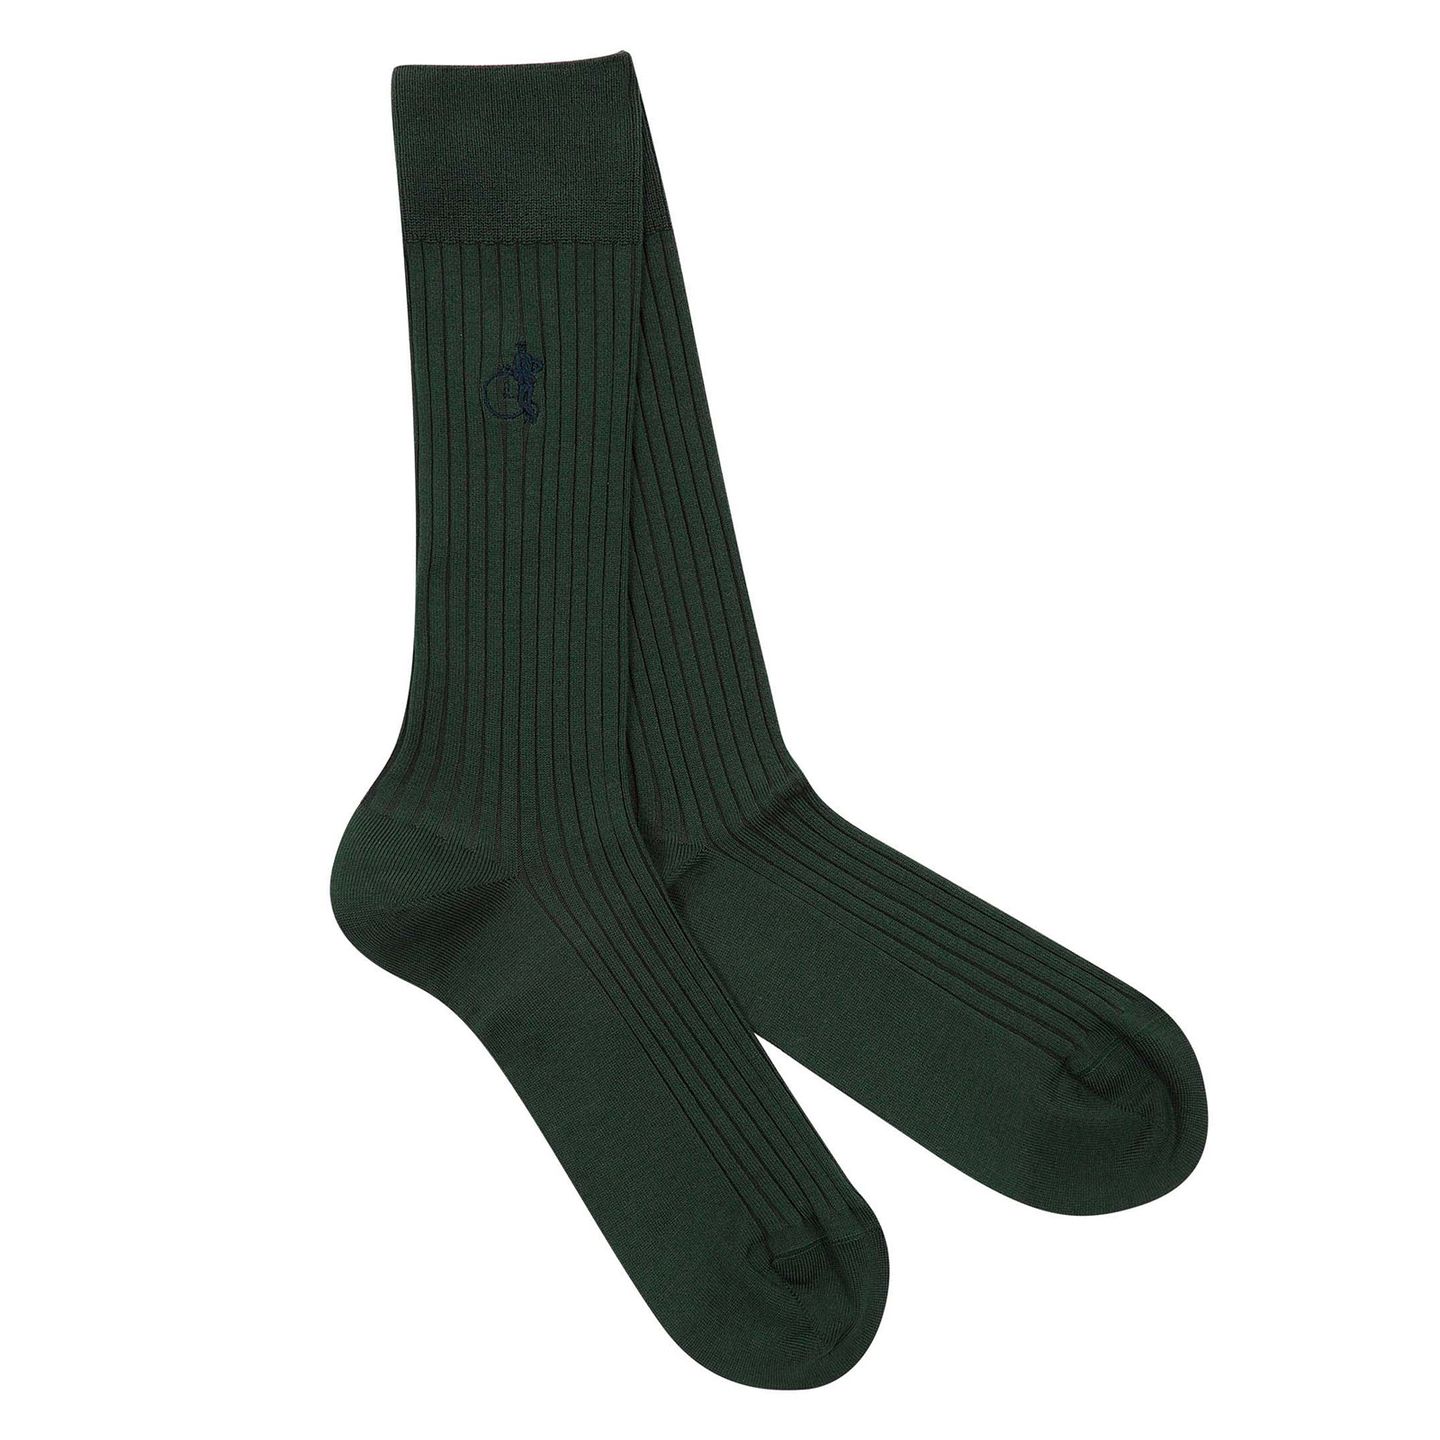 Simply sartorial cotton socks in British racing green